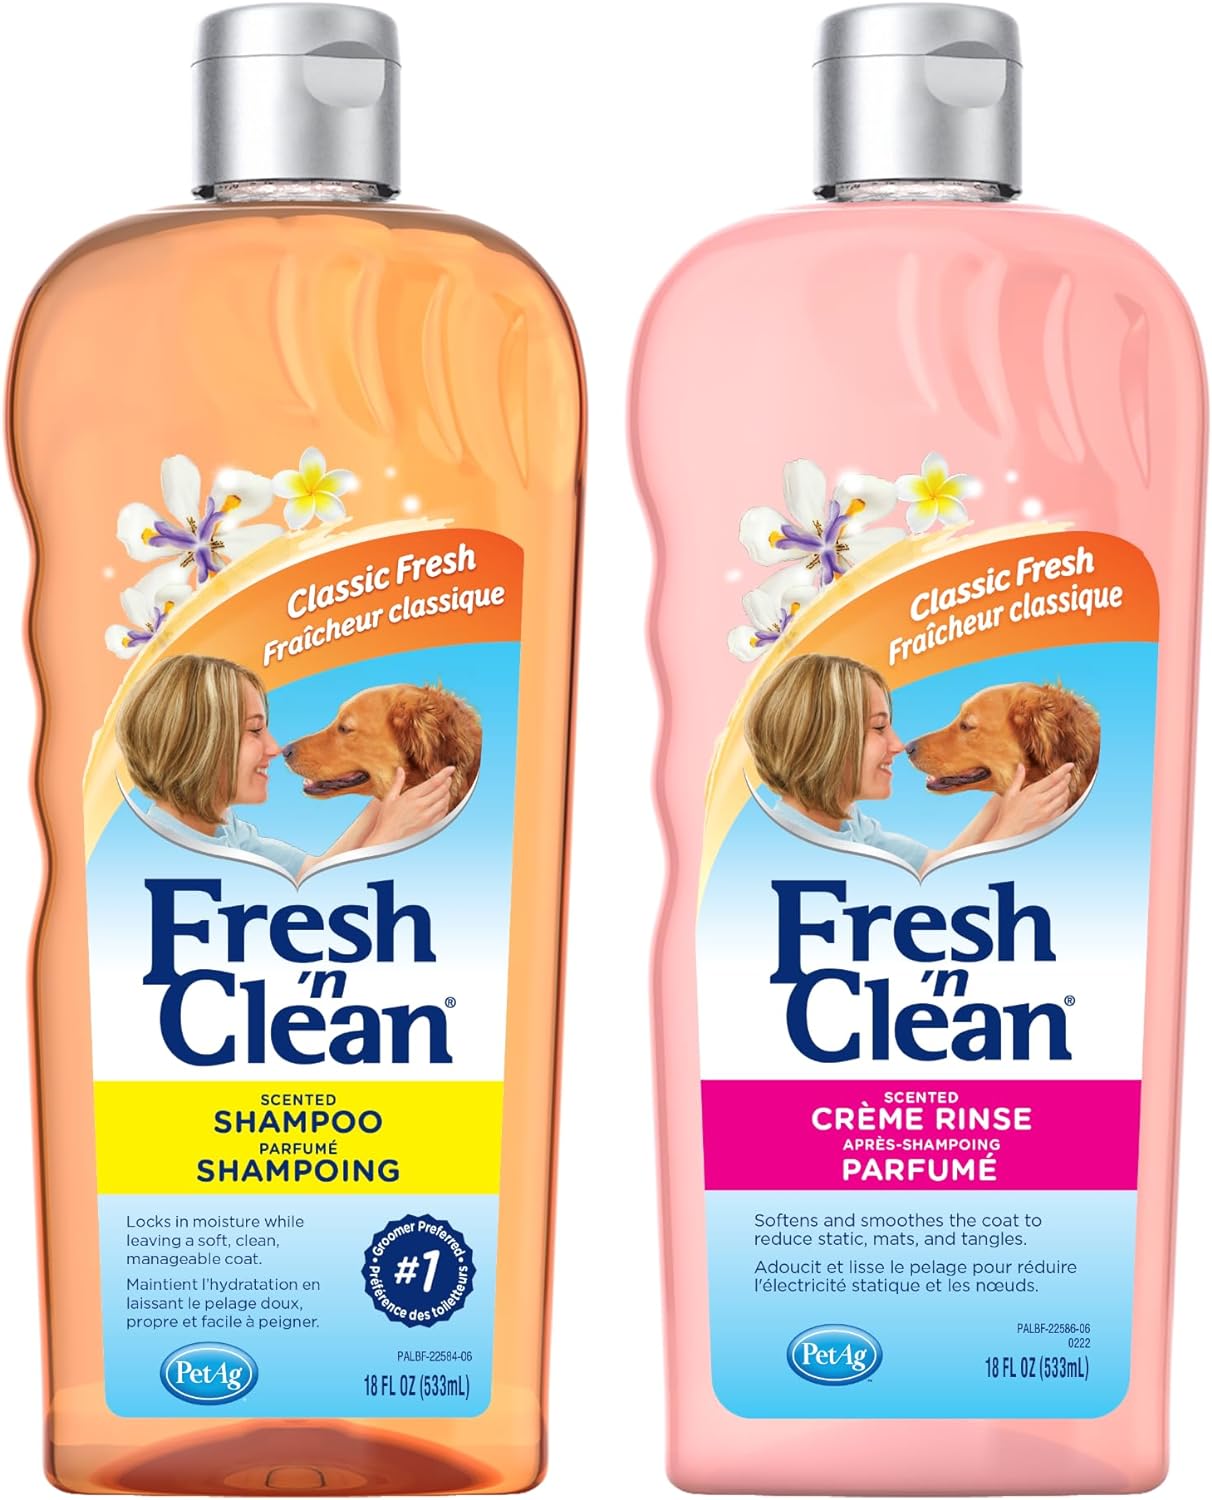 Fresh n Clean Scented Shampoo, Classic Fresh Scent (18 oz)   Fresh n Clean Scented Creme Rinse Conditioner, Classic Fresh Scent (18 oz)